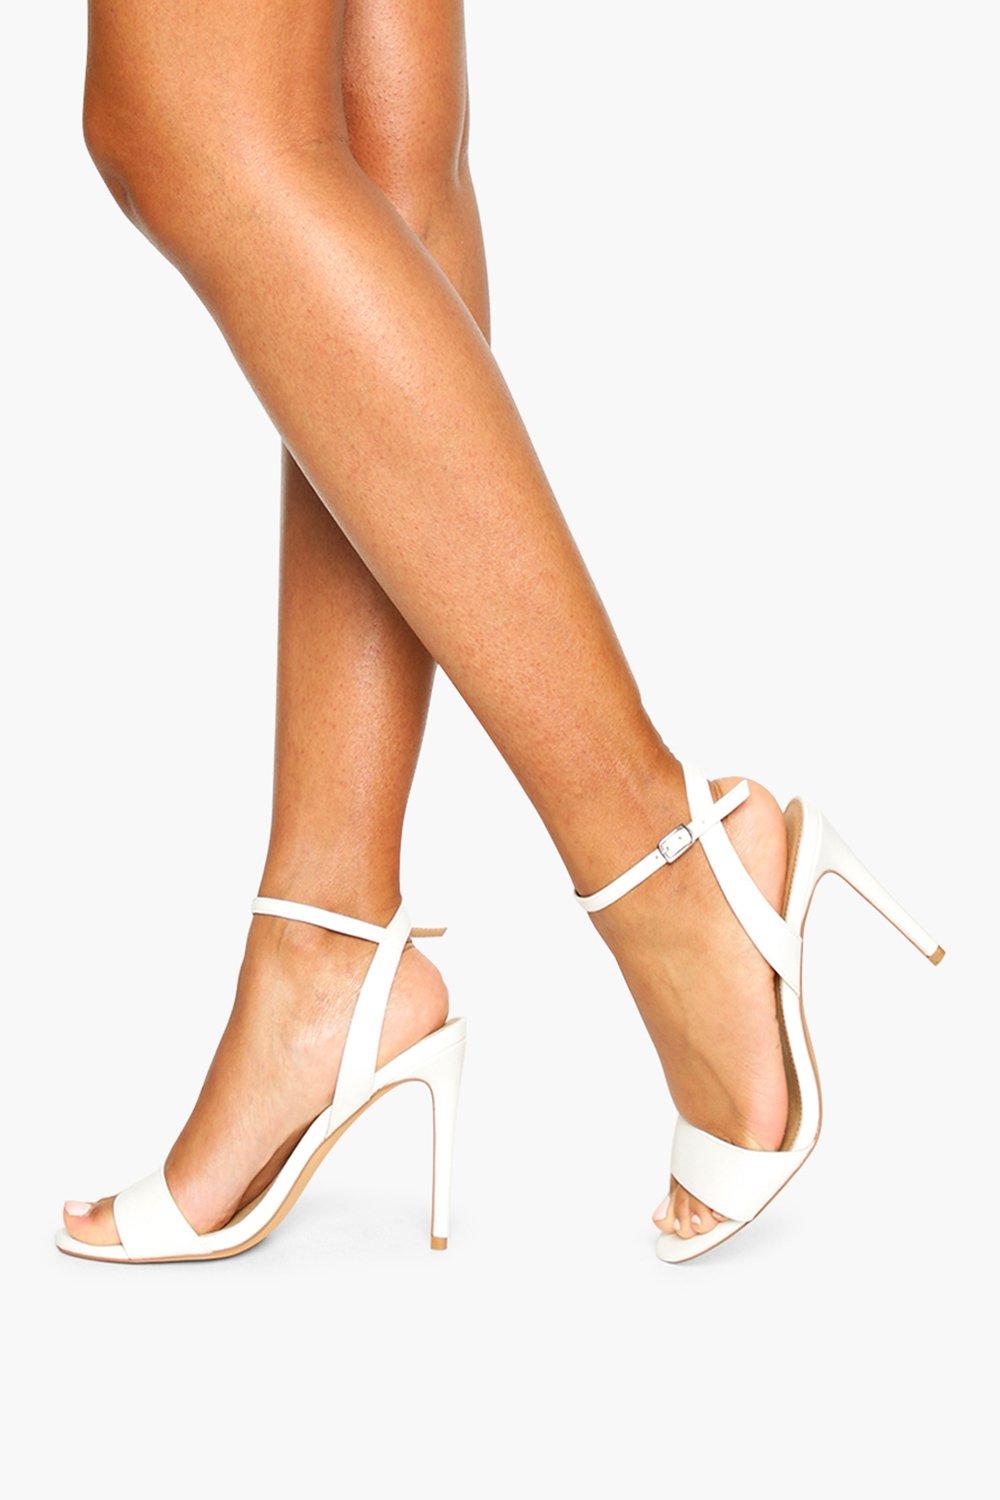 white frill heels